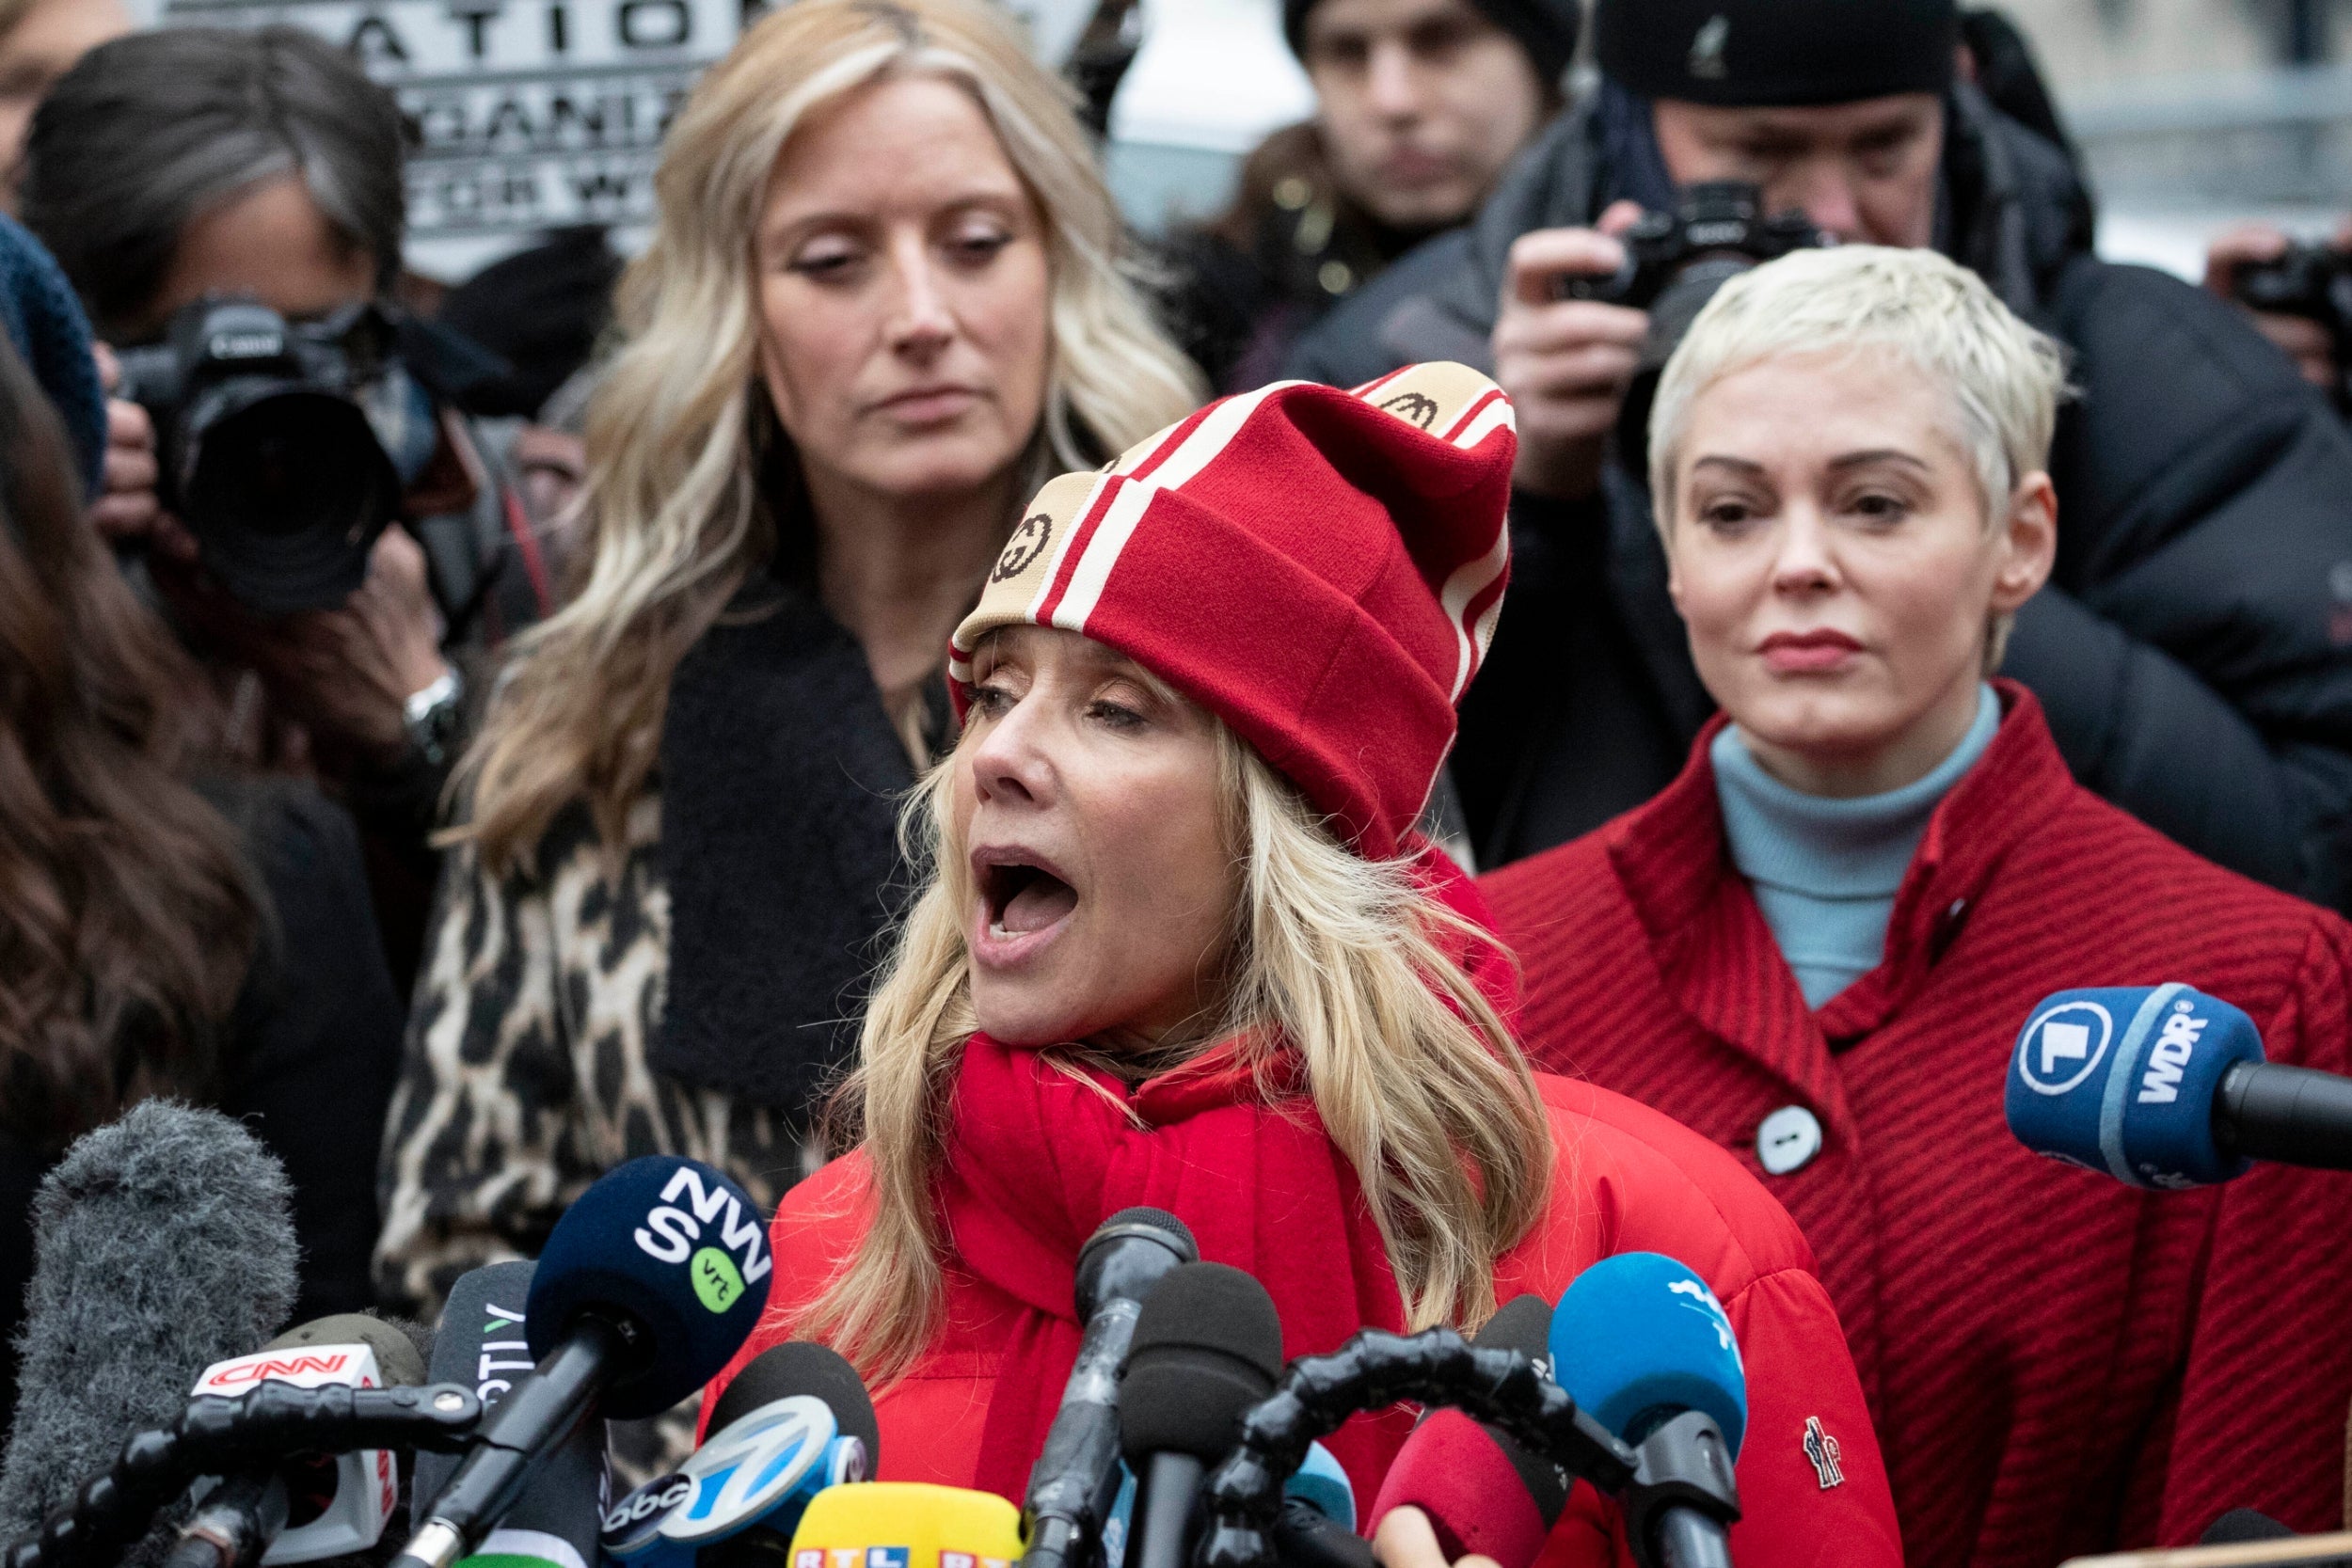 Harvey Weinstein accuser Rosanna Arquette hails courage of women who helped convict him of rape